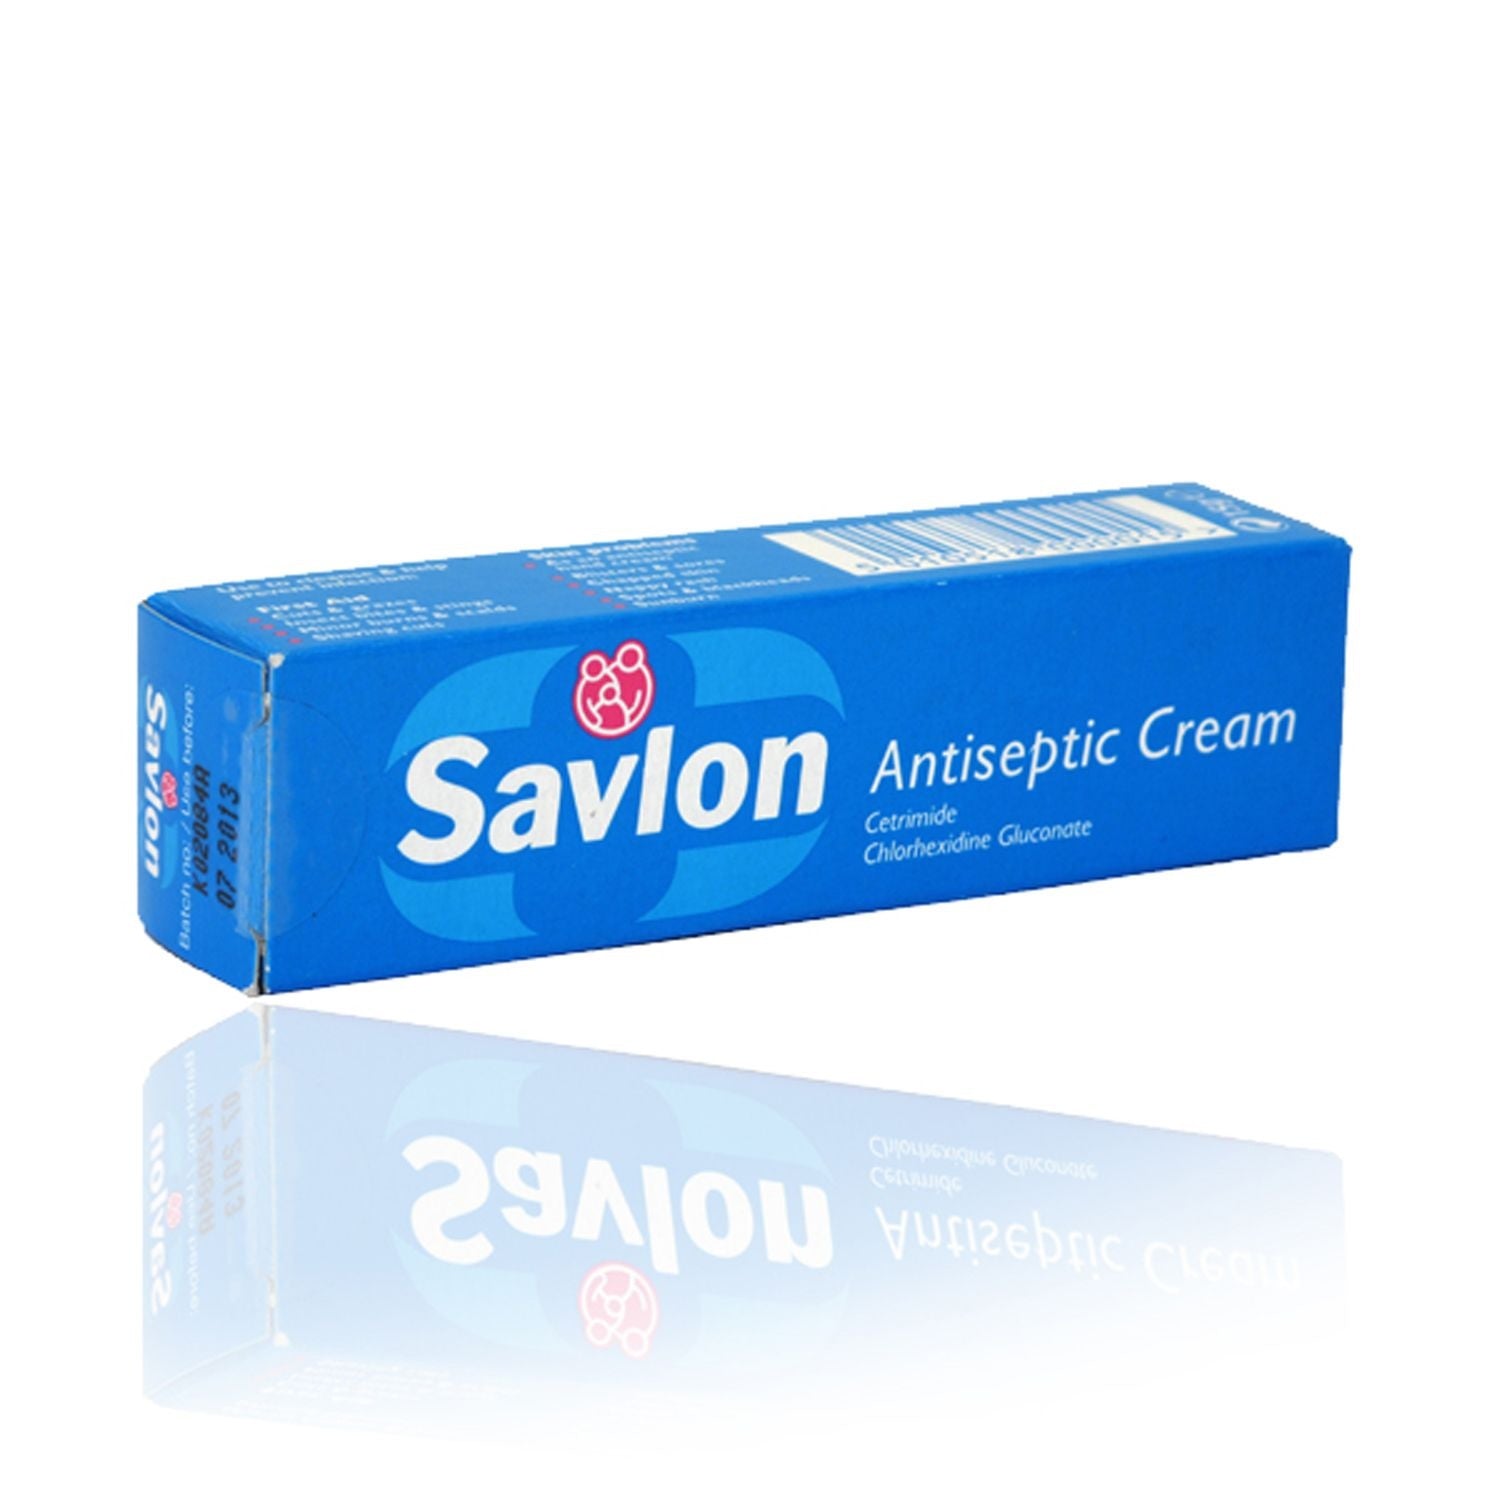 Savlon | GSL | 15g | Cream | Pack of 1